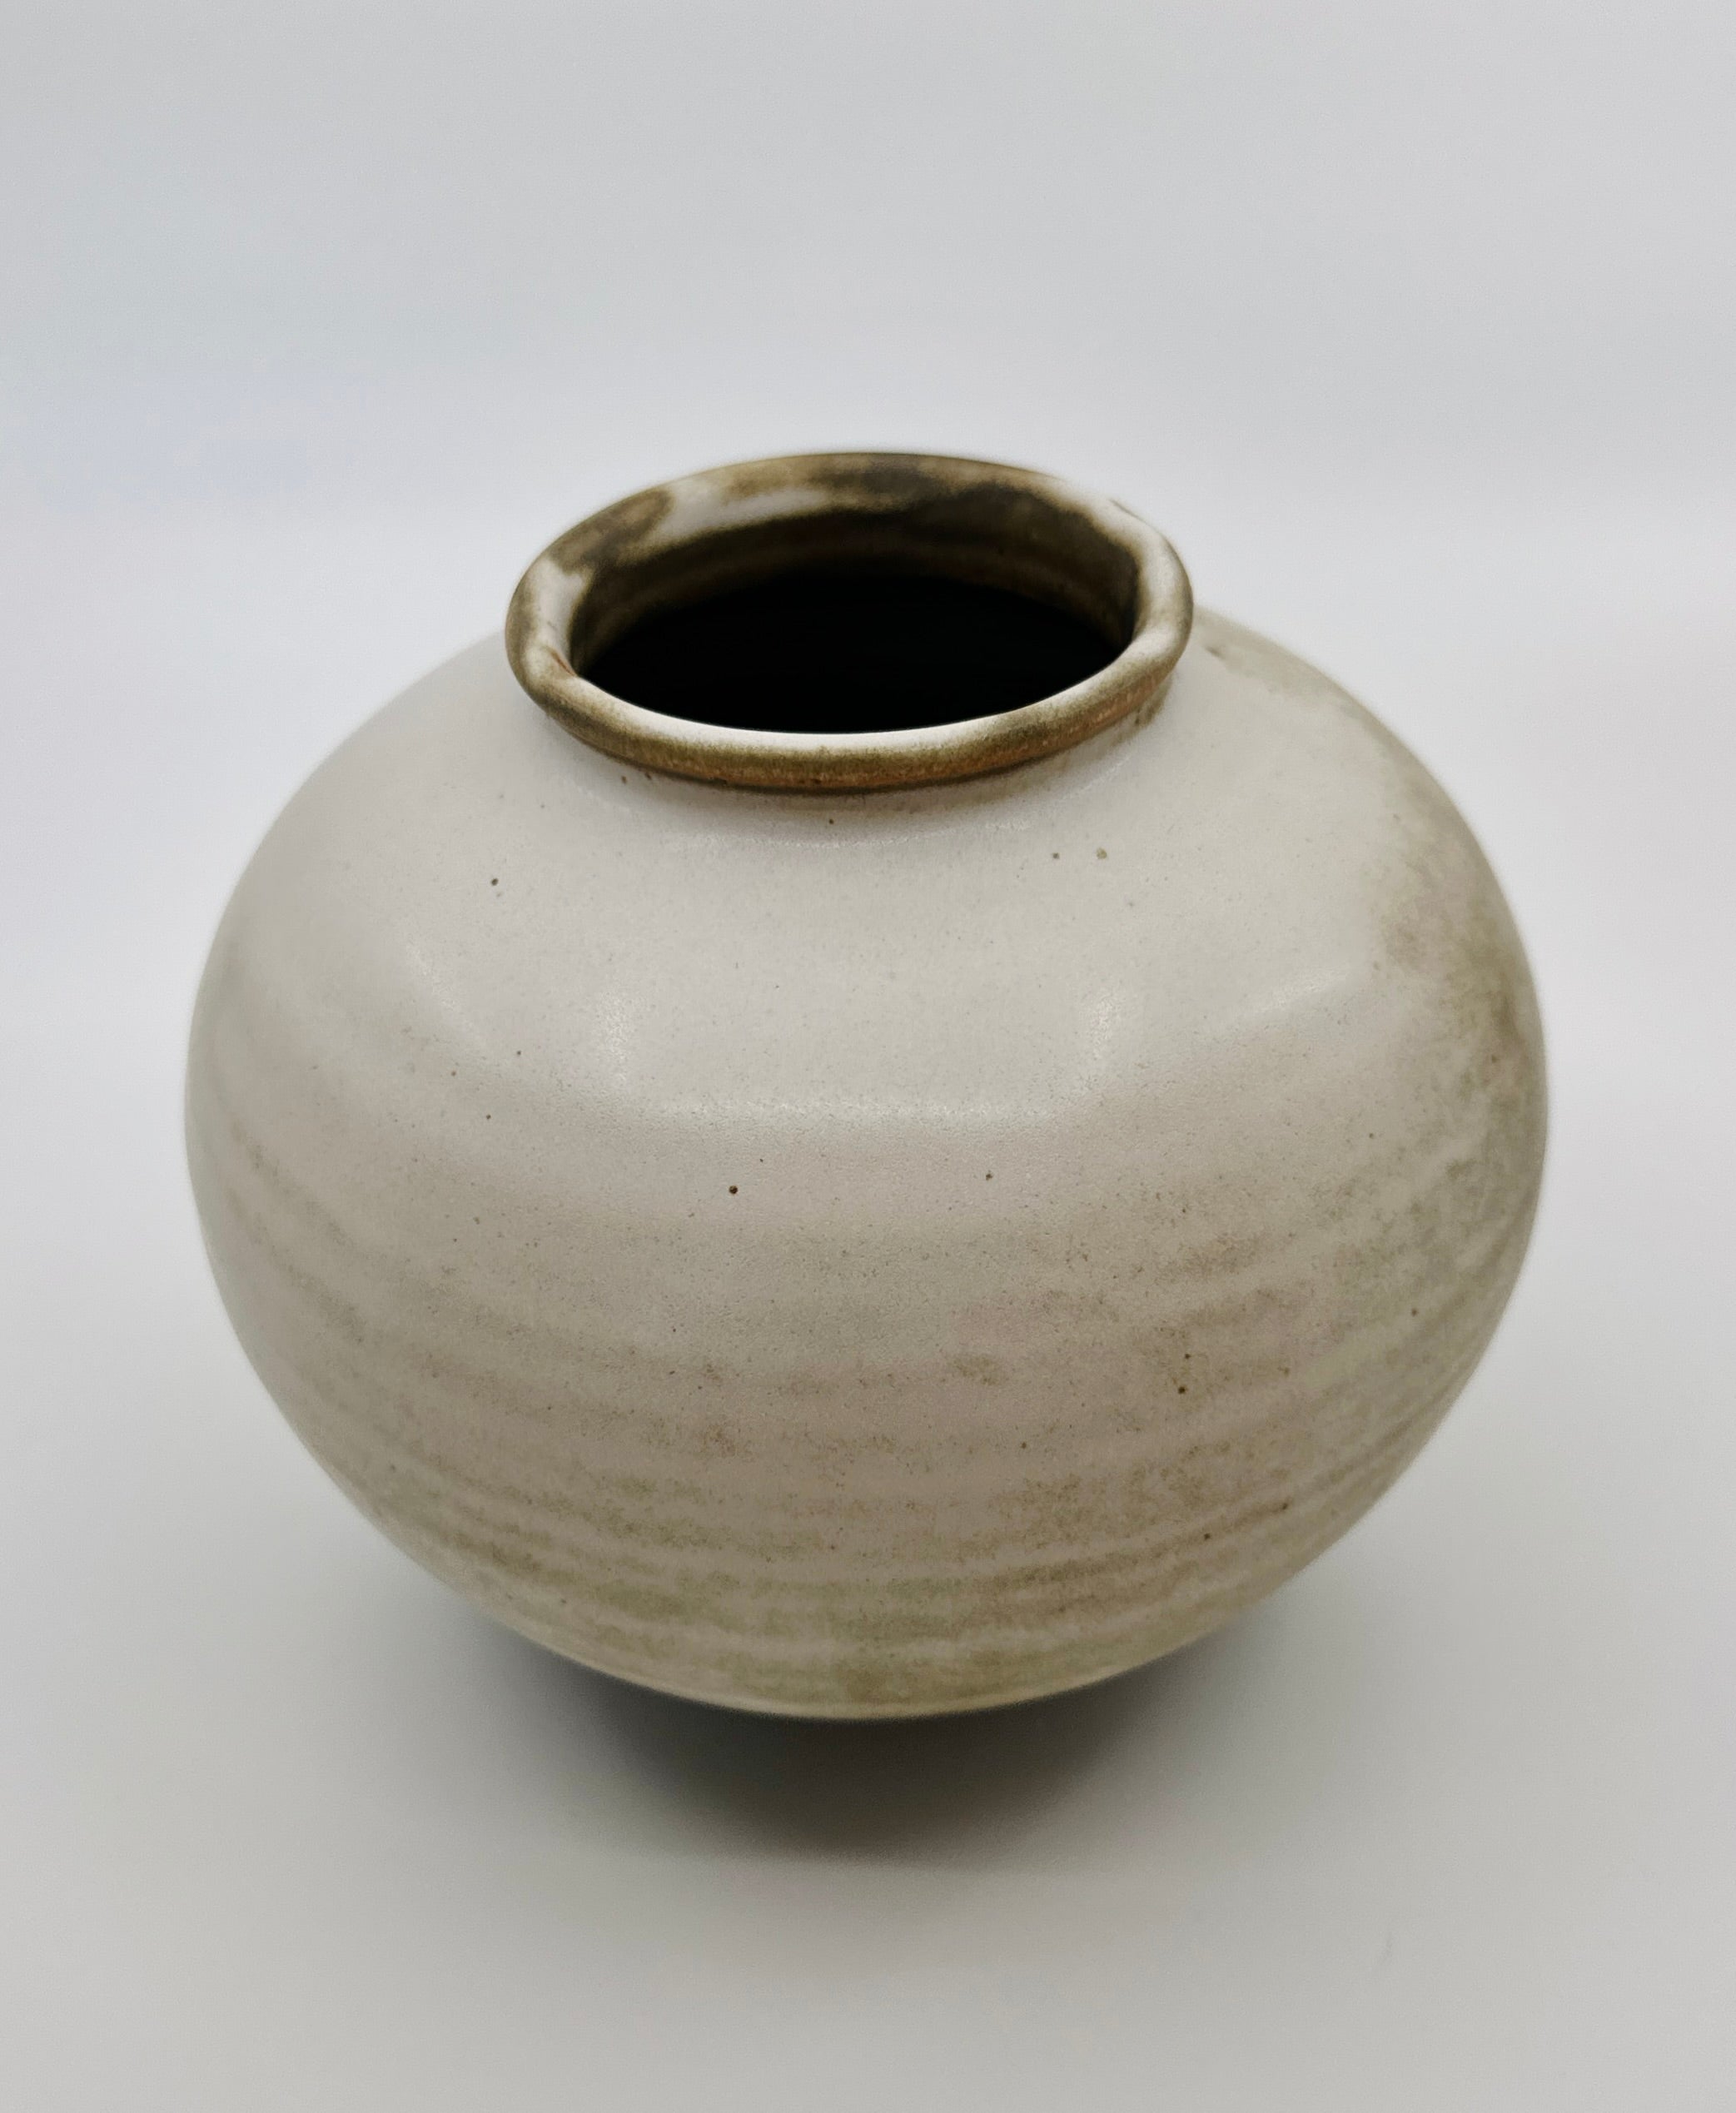 Gray/beige speckled vase no. 31